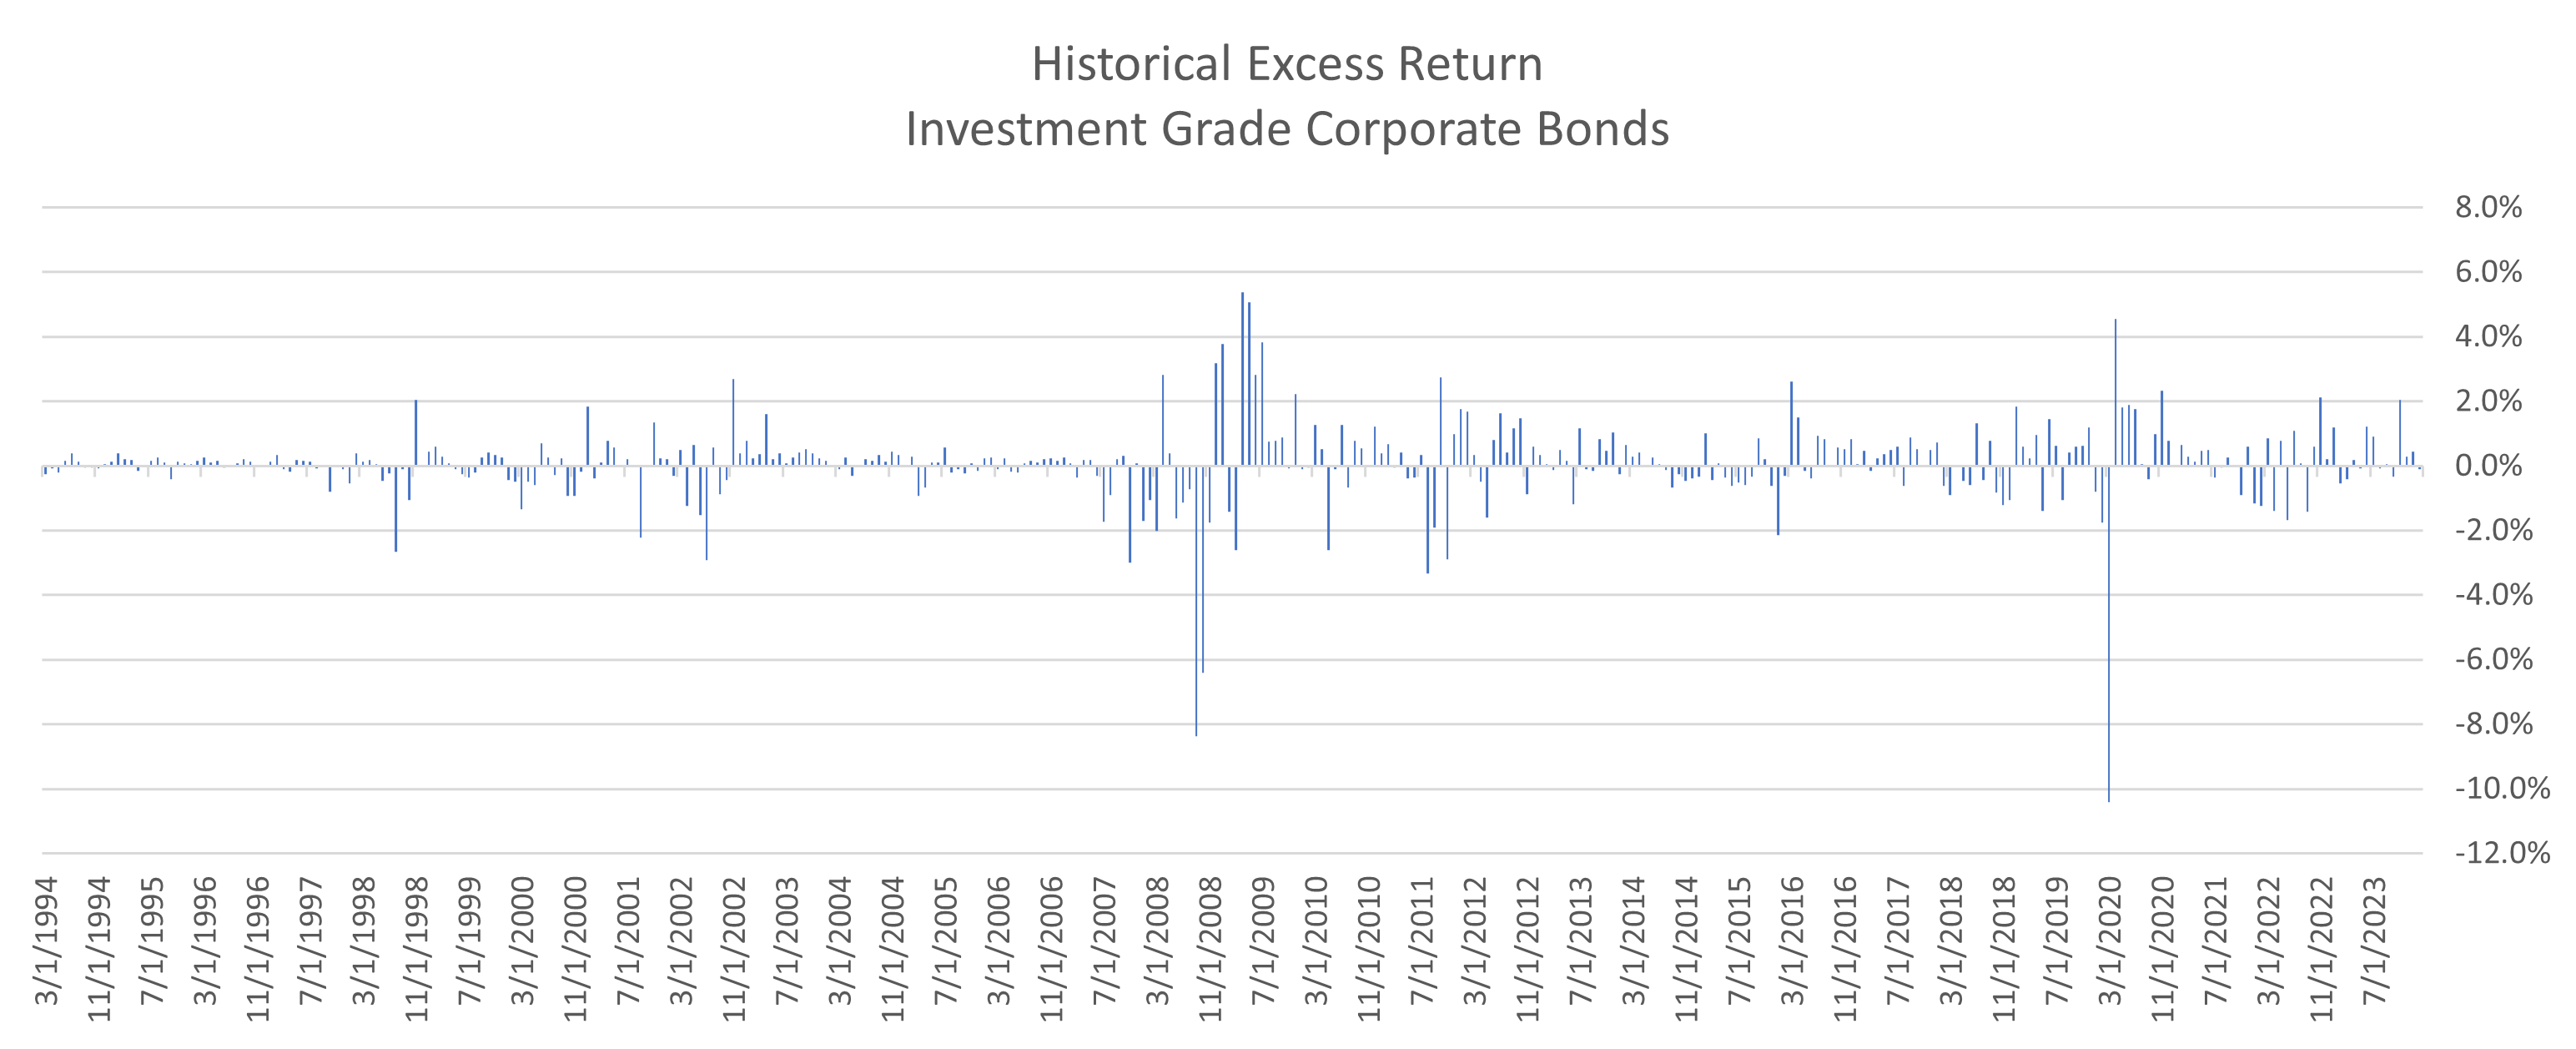 Historical Excess Return Investment Grade Corporate Bonds